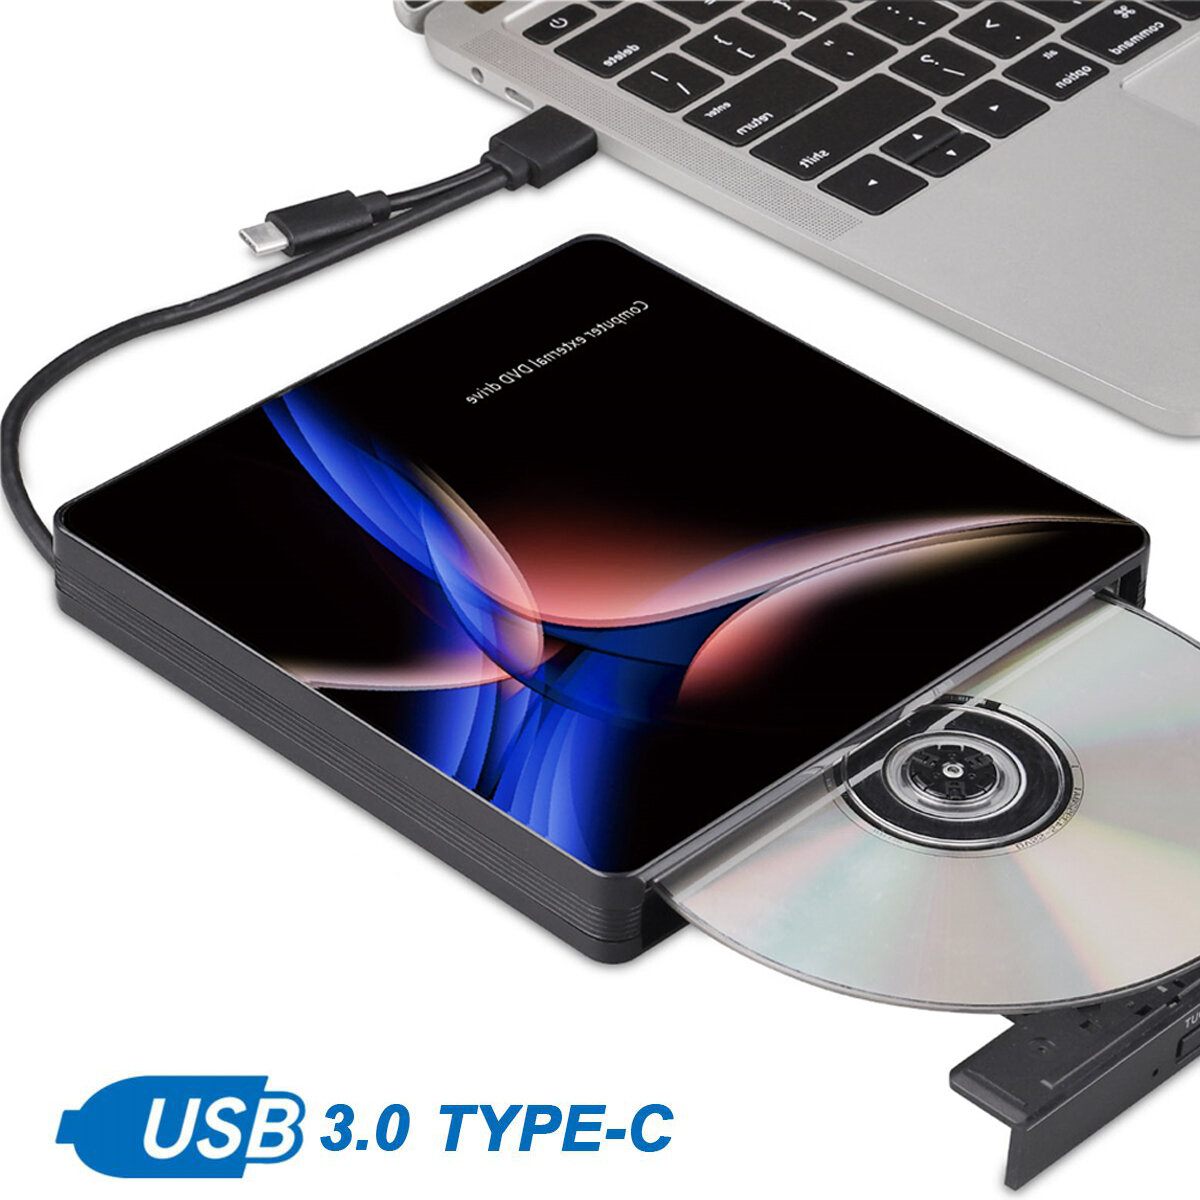 

USB 3.0 Slim External CD DVD RW Writer Drive Burner Reader Player For PC Laptop